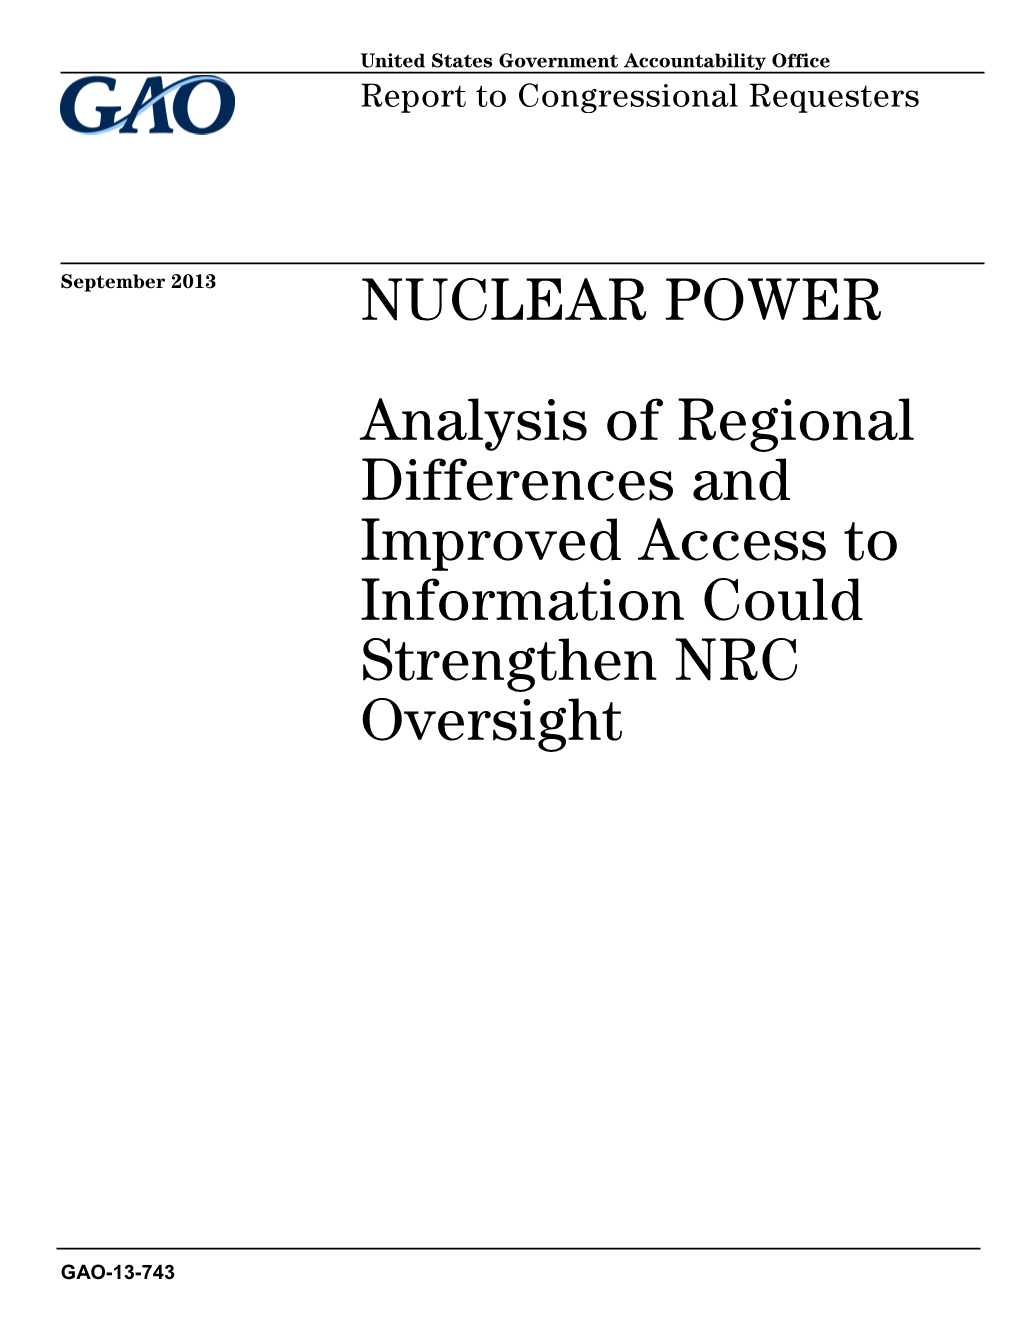 Gao-13-743, Nuclear Power